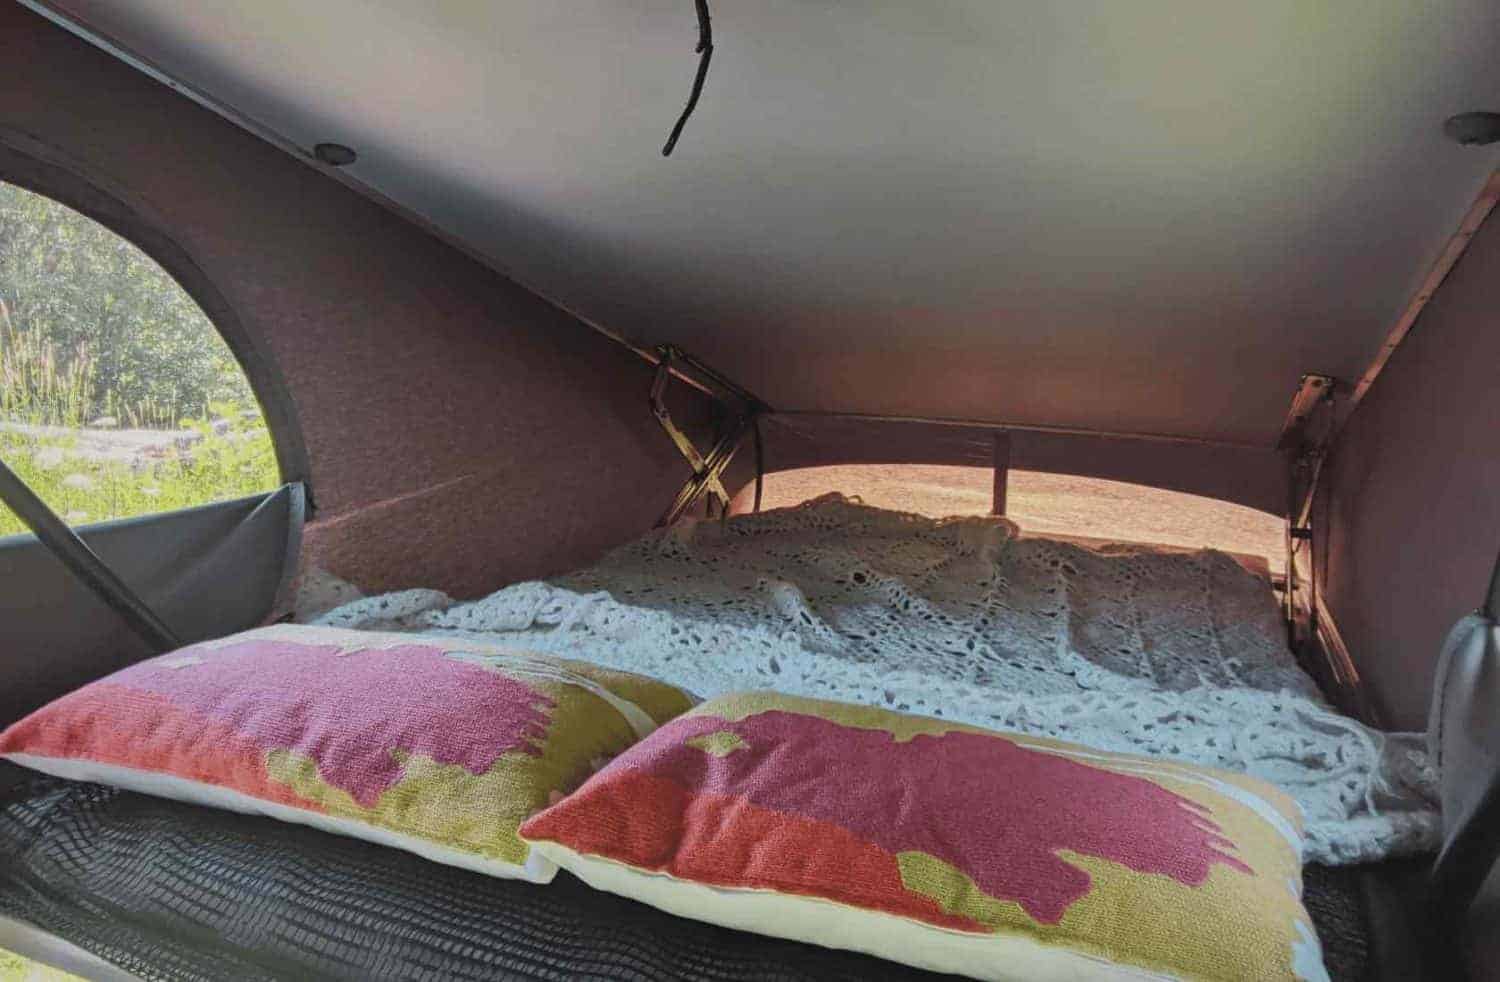 Sleeping under pop-up roof